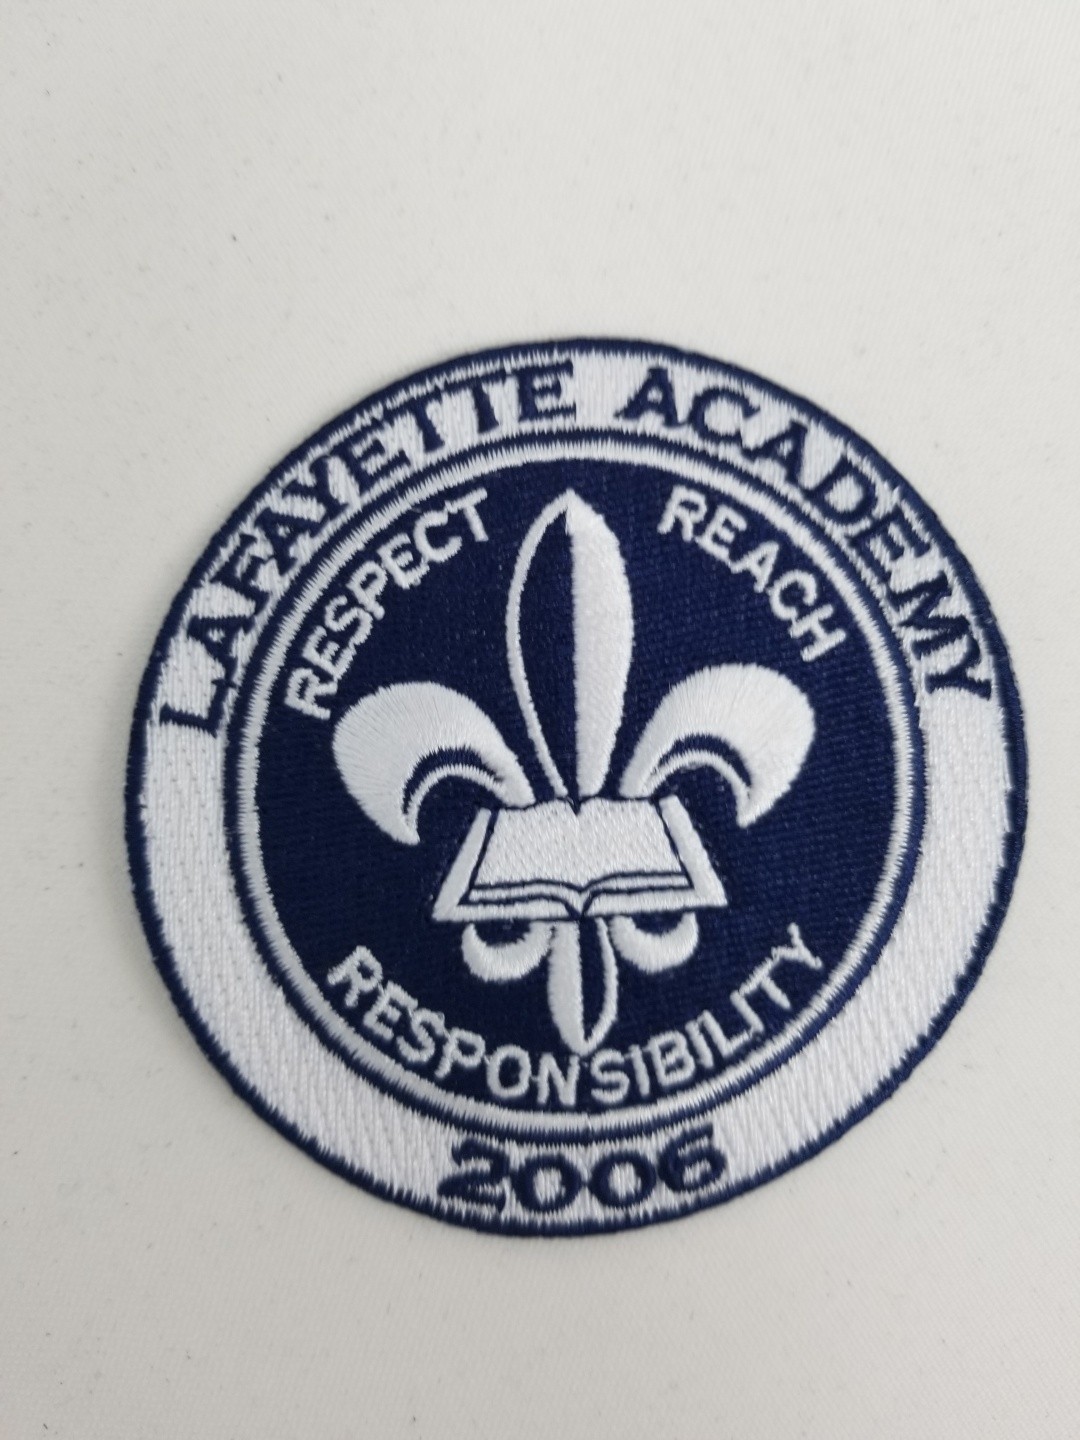 Lafayette Academy- New Orleans, LA